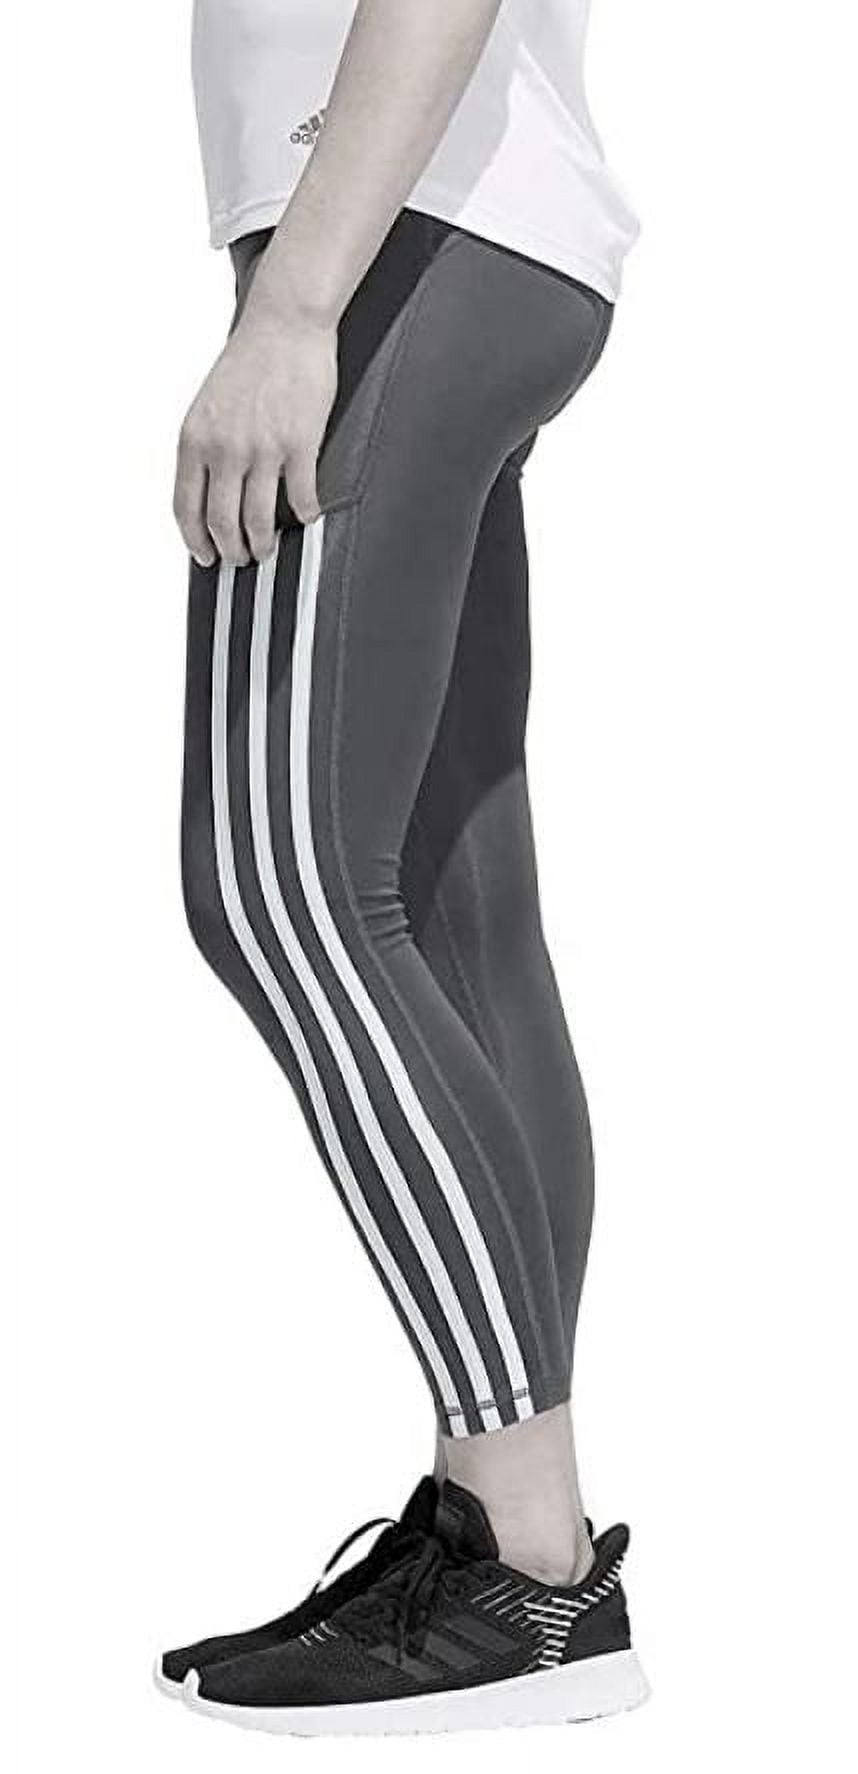 Adidas Women's 3 Stripe High Waist Active Leggings, Charcoal/White